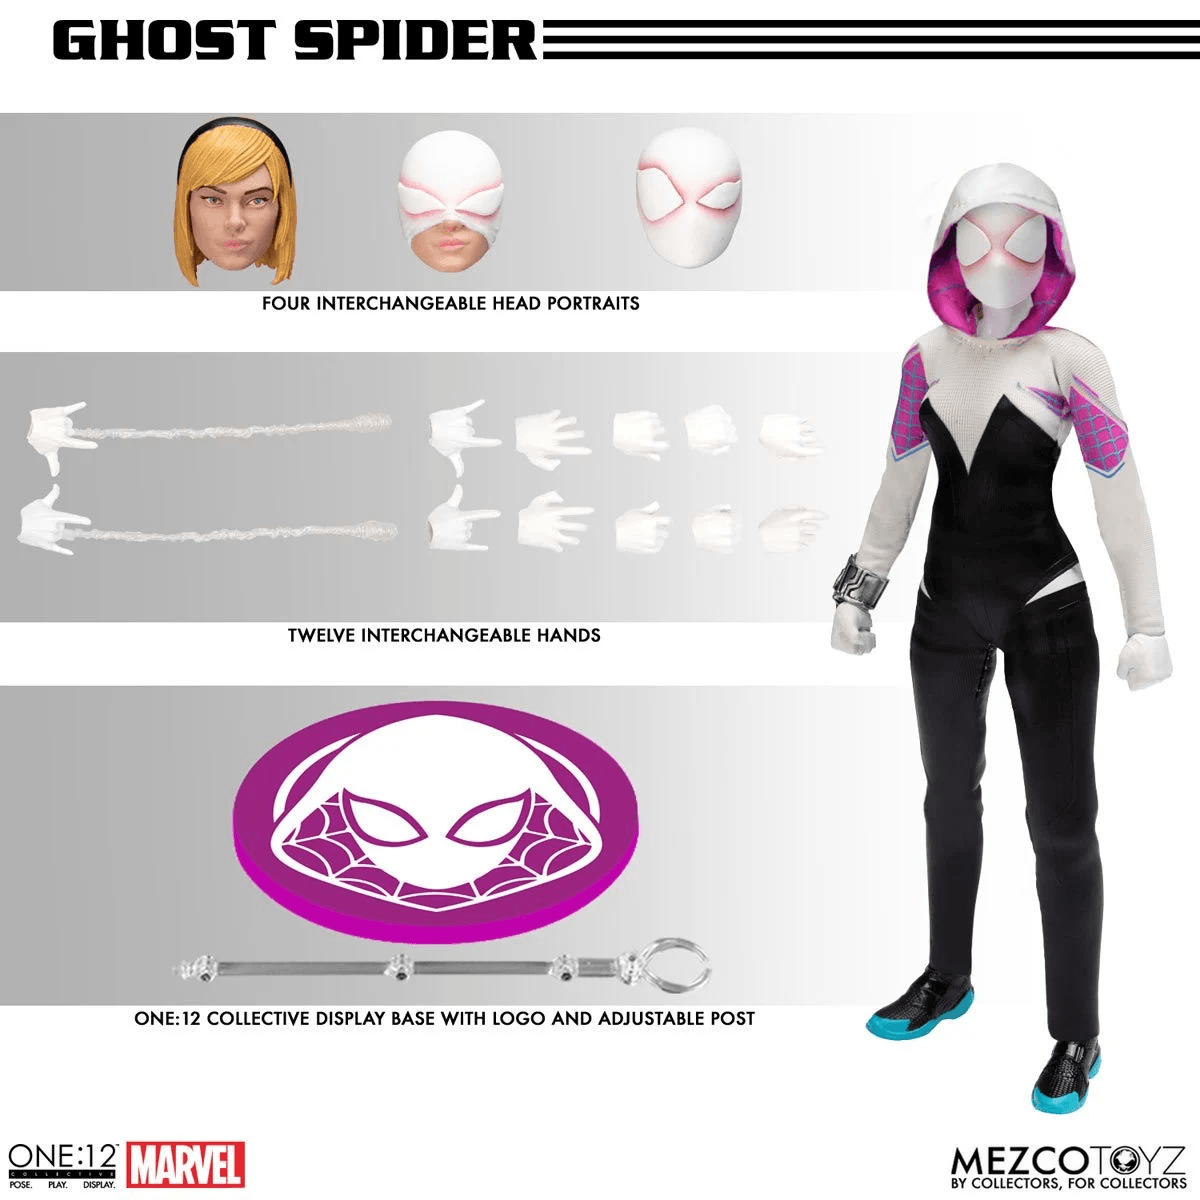 MEZ77310 Spider-Man - Ghost Spider ONE:12 Collective Figure - Mezco Toyz - Titan Pop Culture